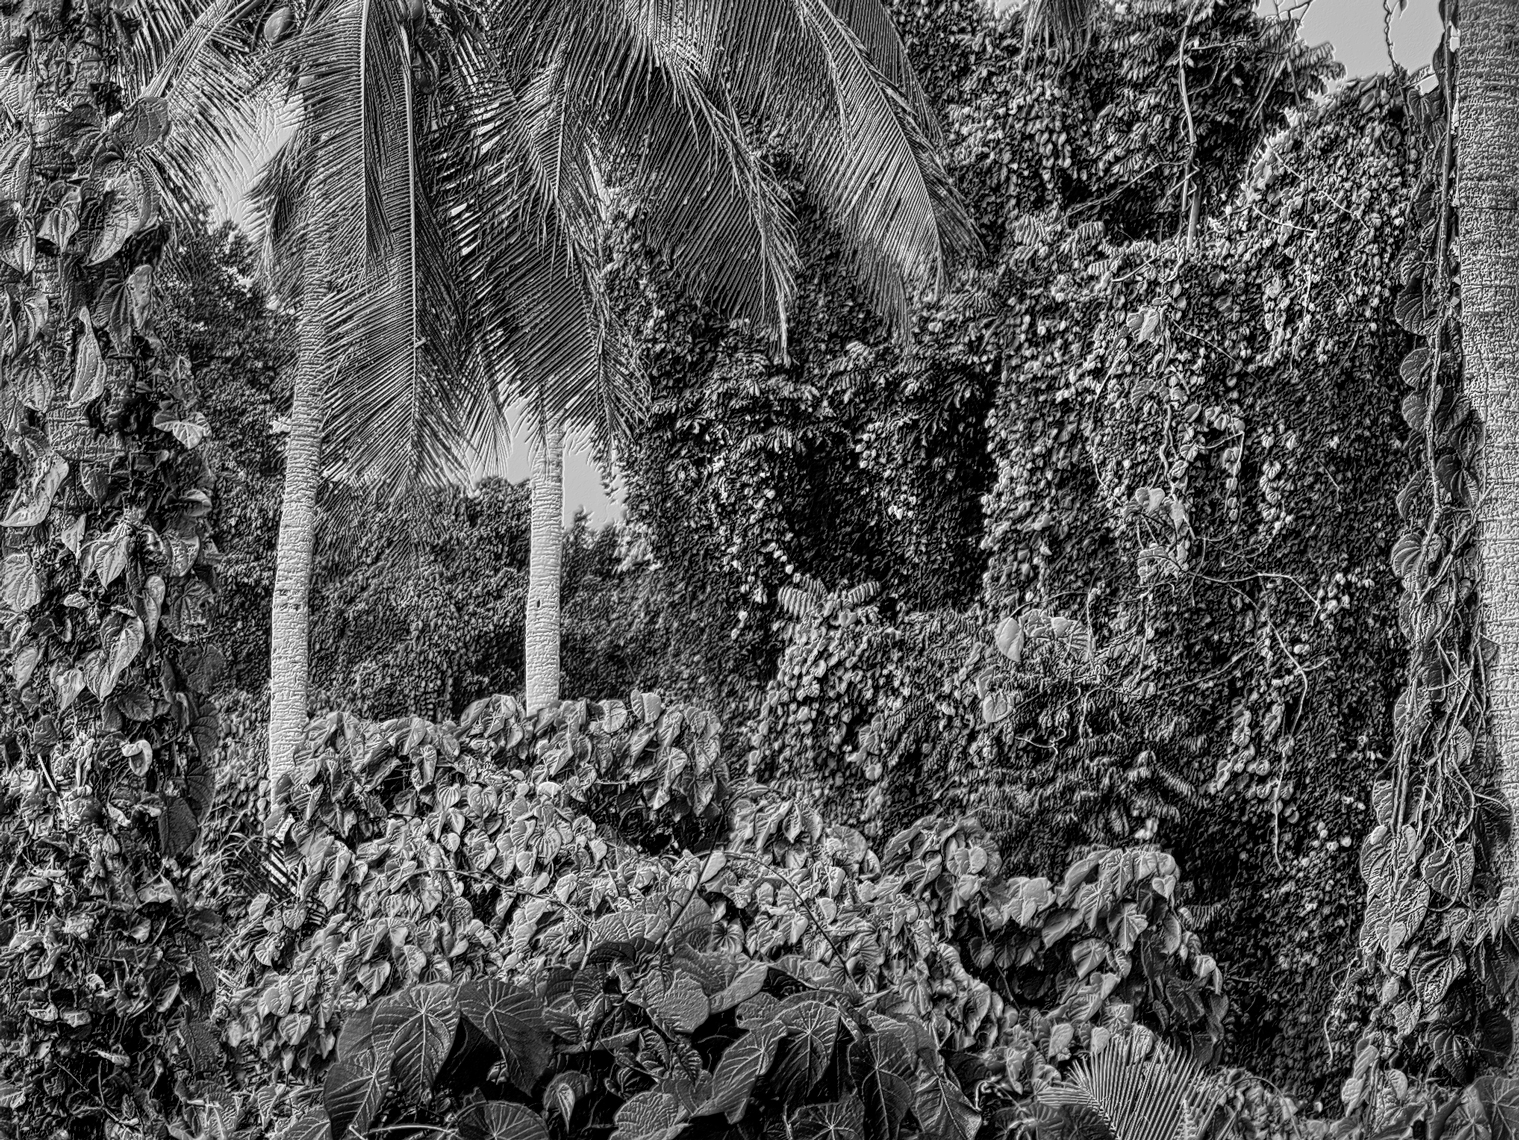 Jon Wyatt Photography - Fault Line X - A tsunami of vegetation - invasive vines in samoa